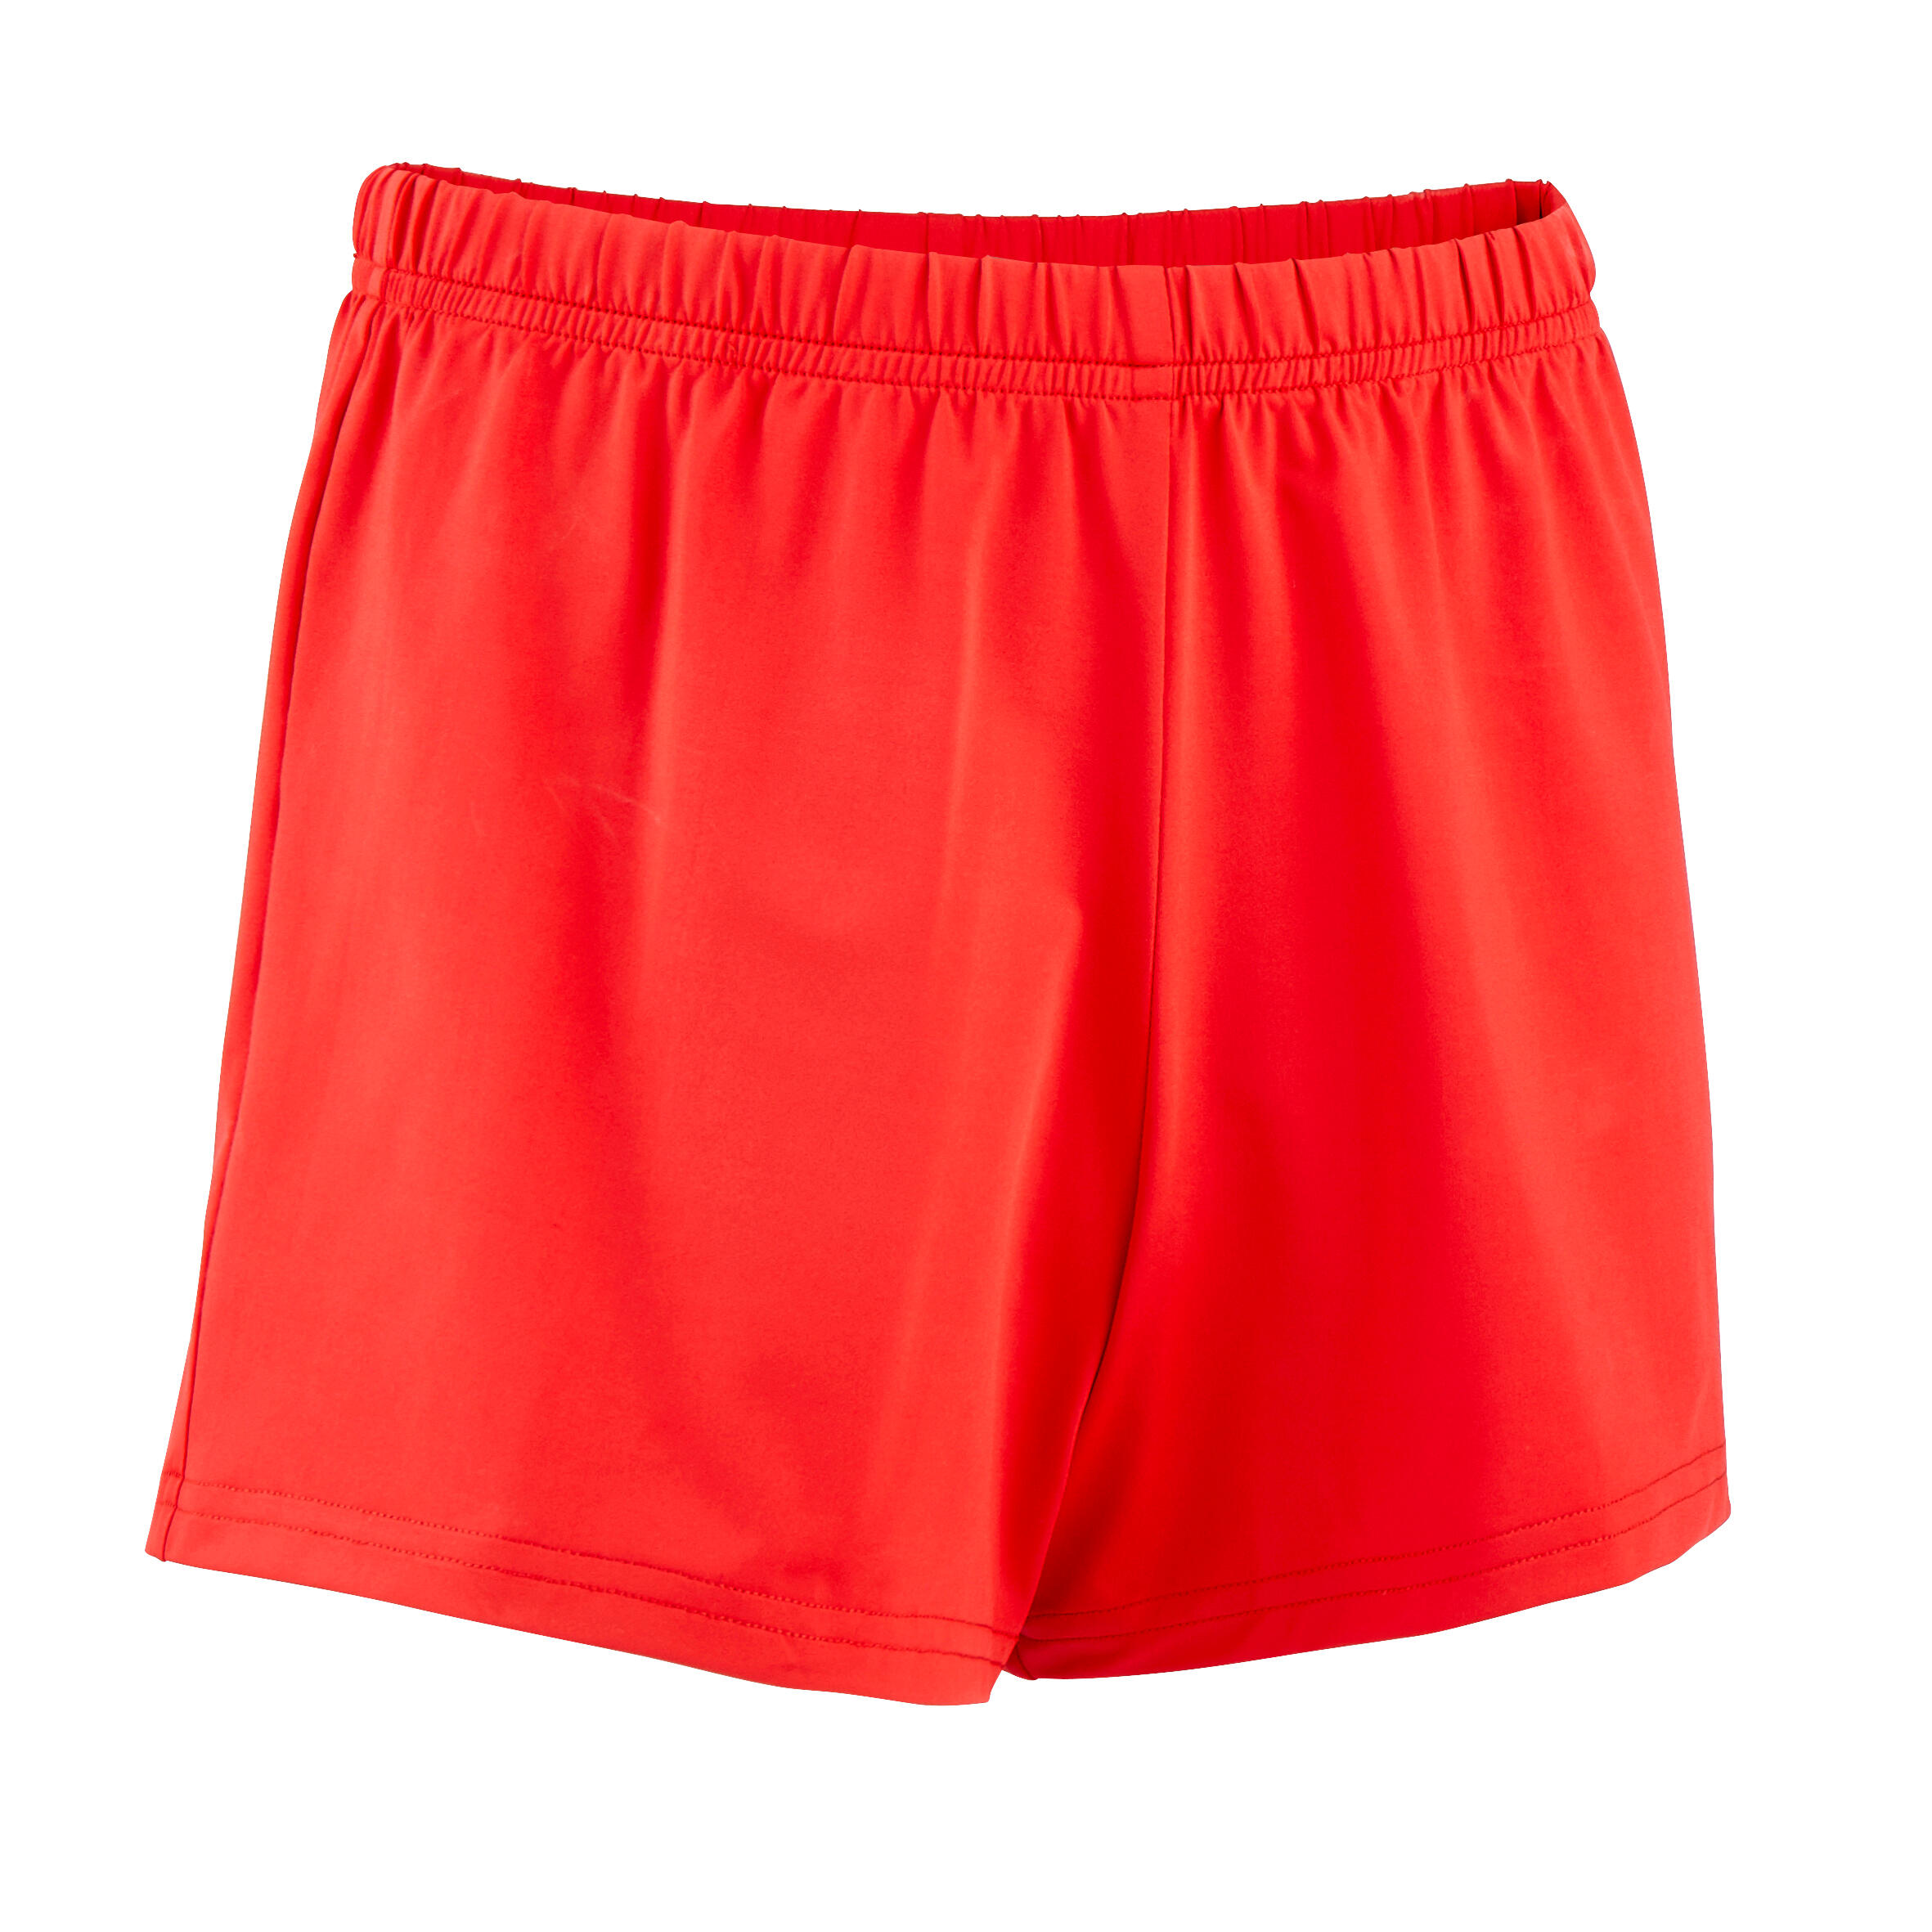 Boys' Gymnastics Shorts - Red 1/4